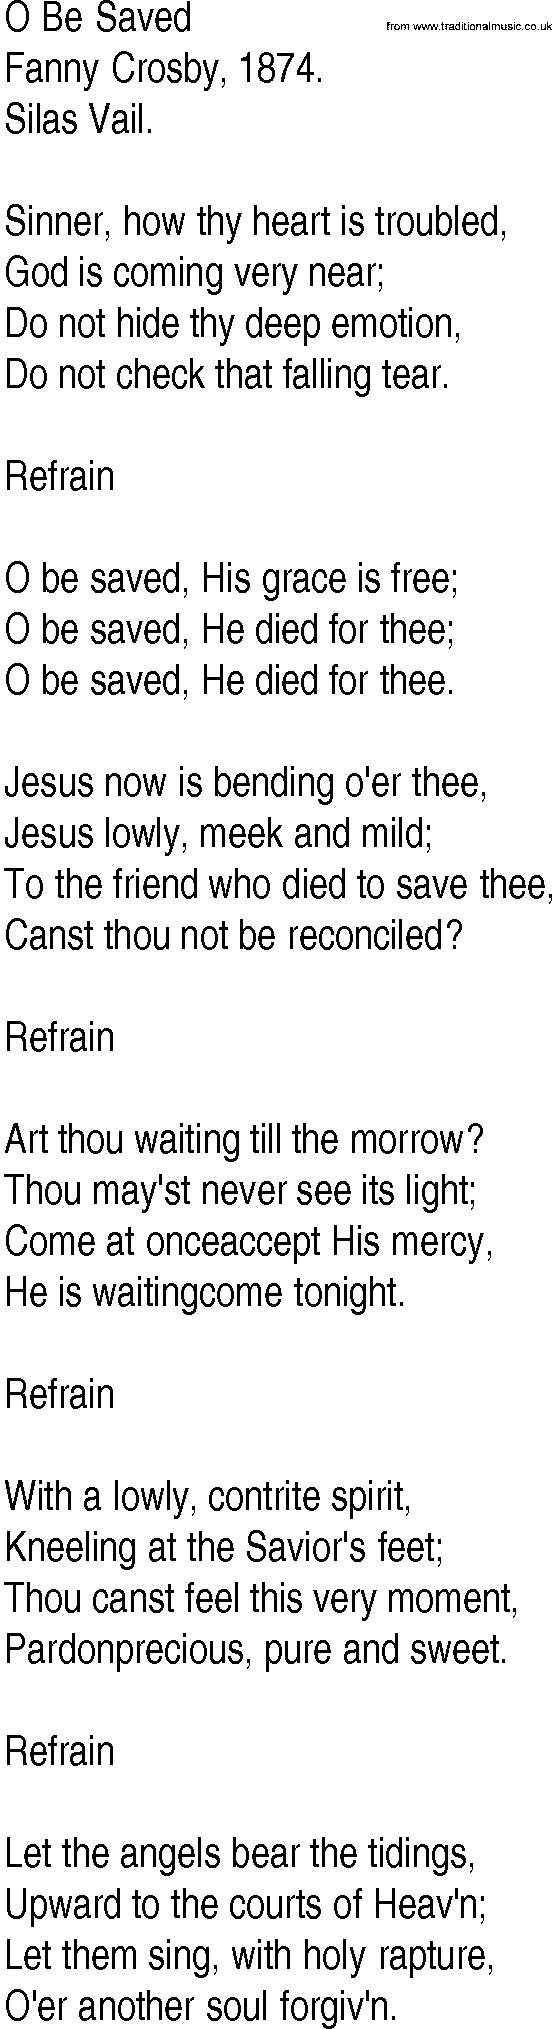 Hymn and Gospel Song: O Be Saved by Fanny Crosby lyrics